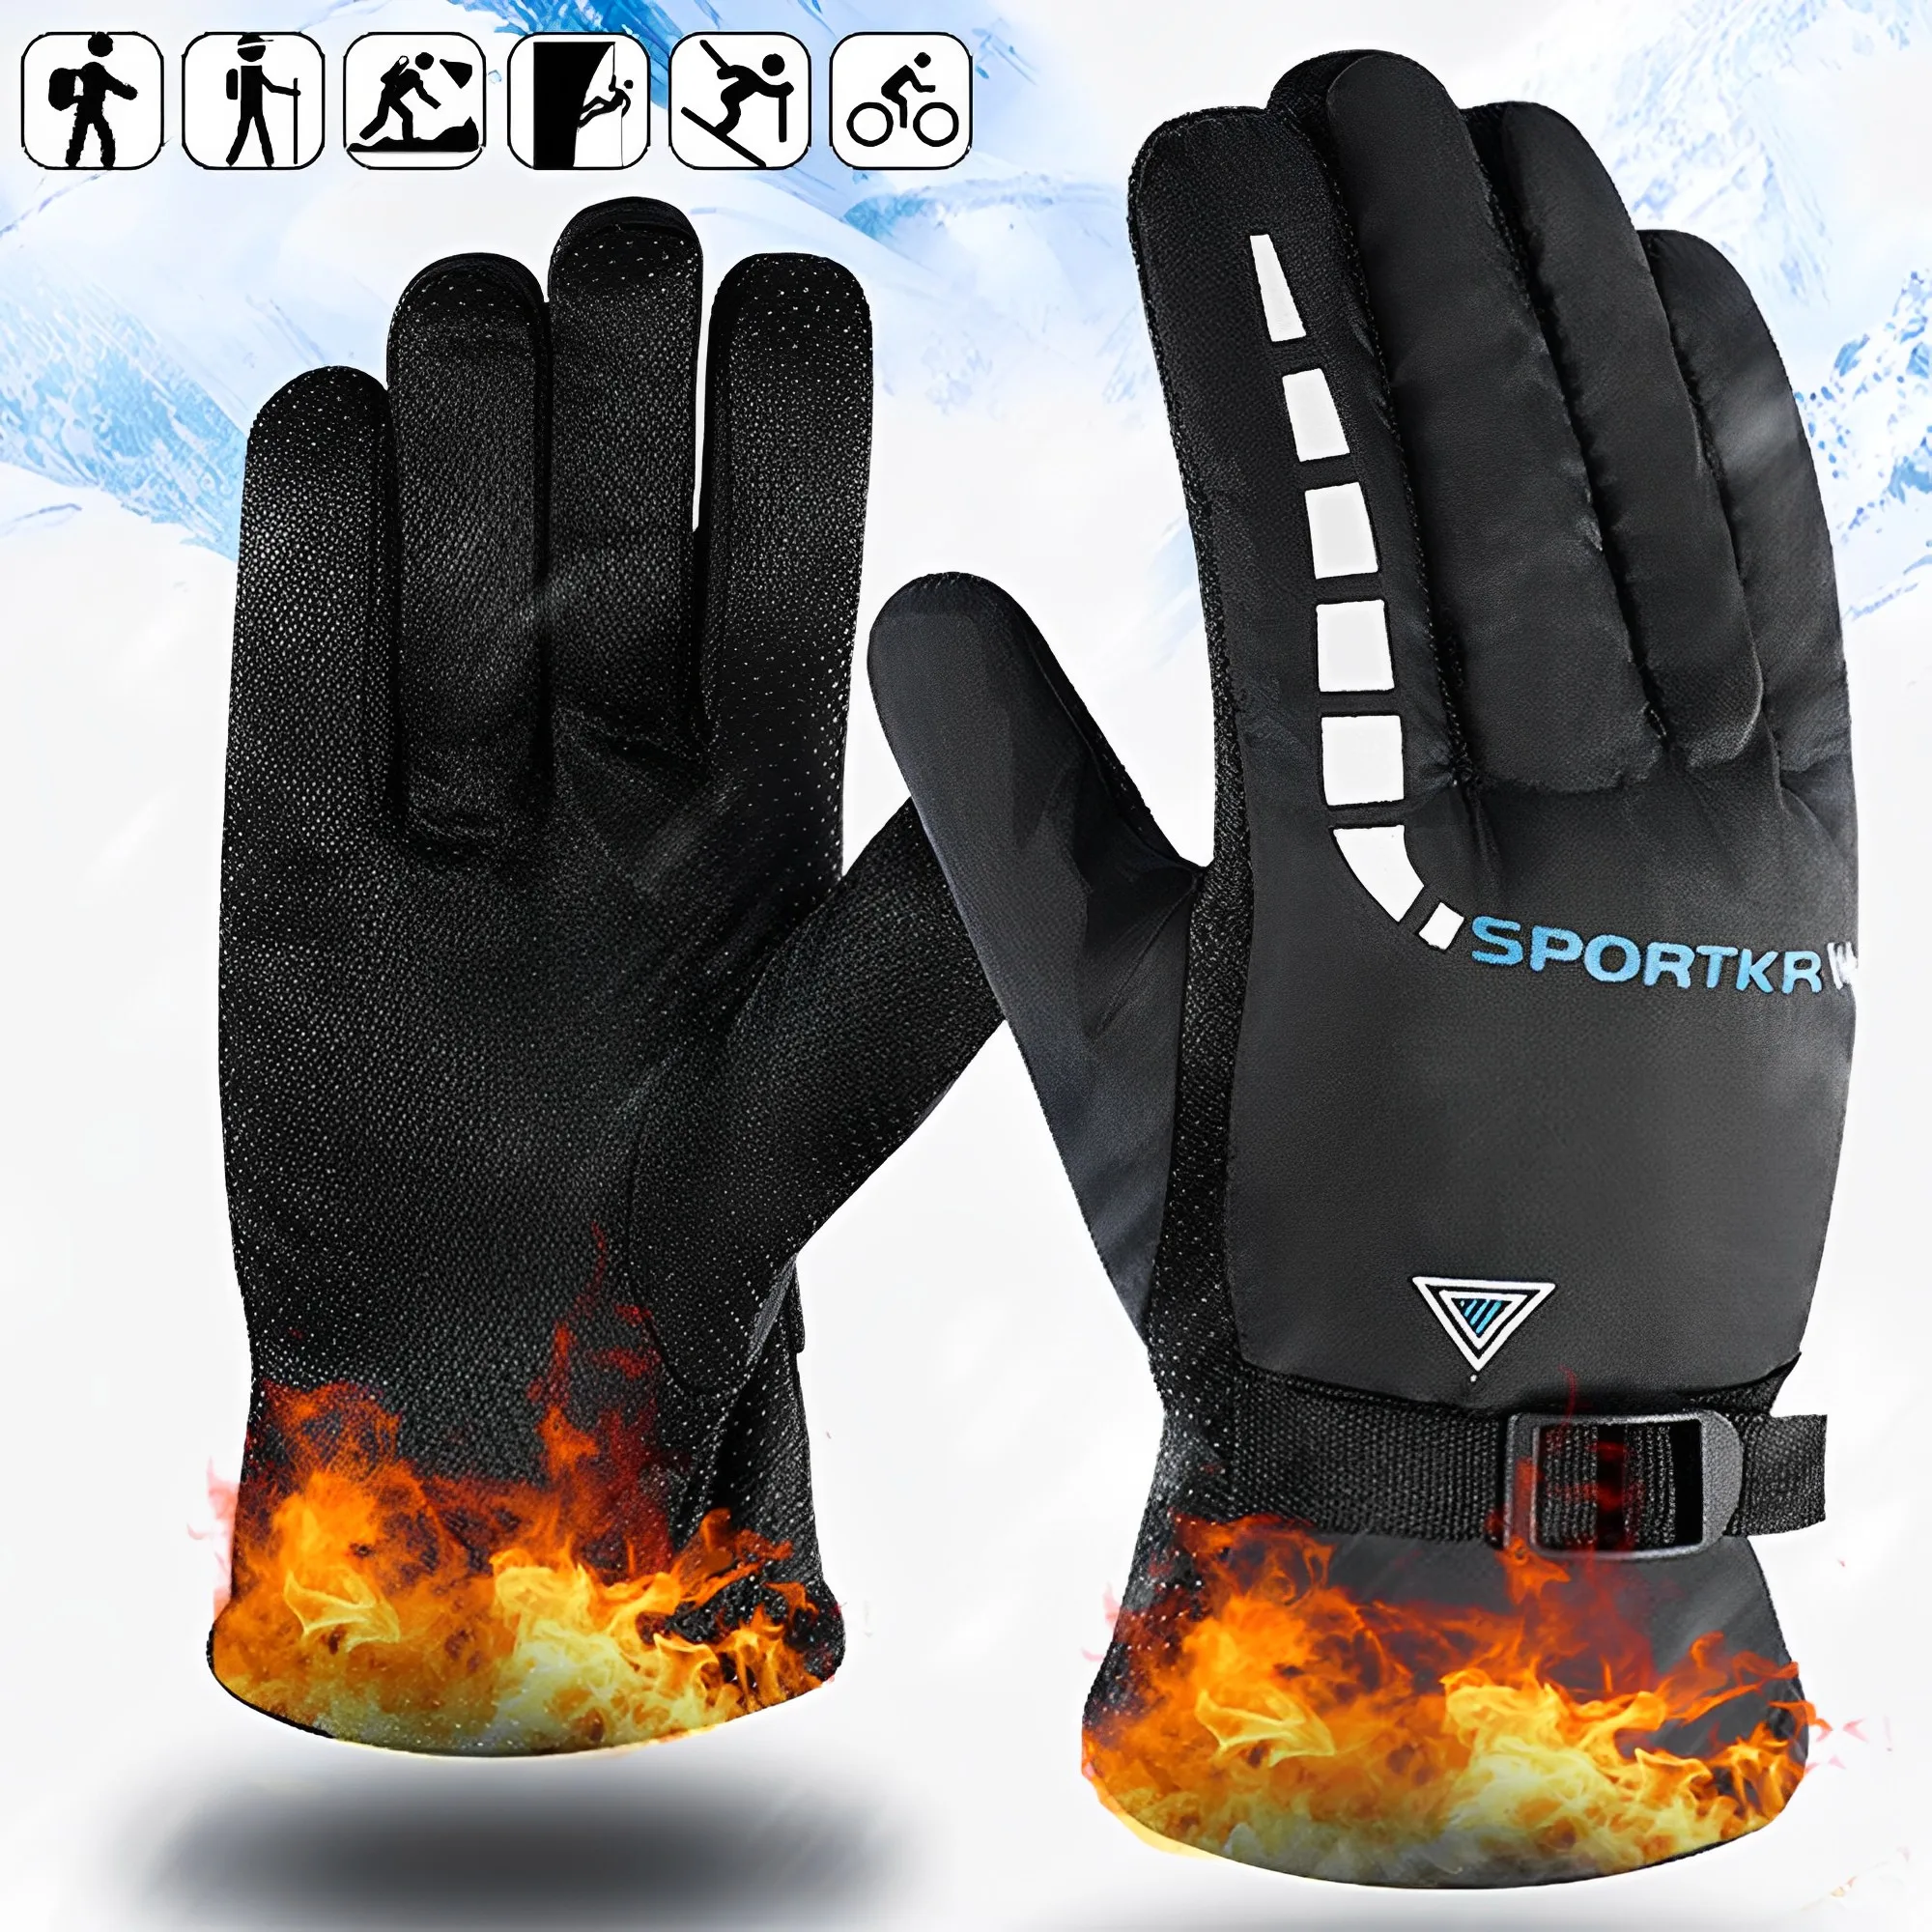 Door waterproof skiing riding hiking warm mitten gloves motorcycle thermal sport gloves thumb200